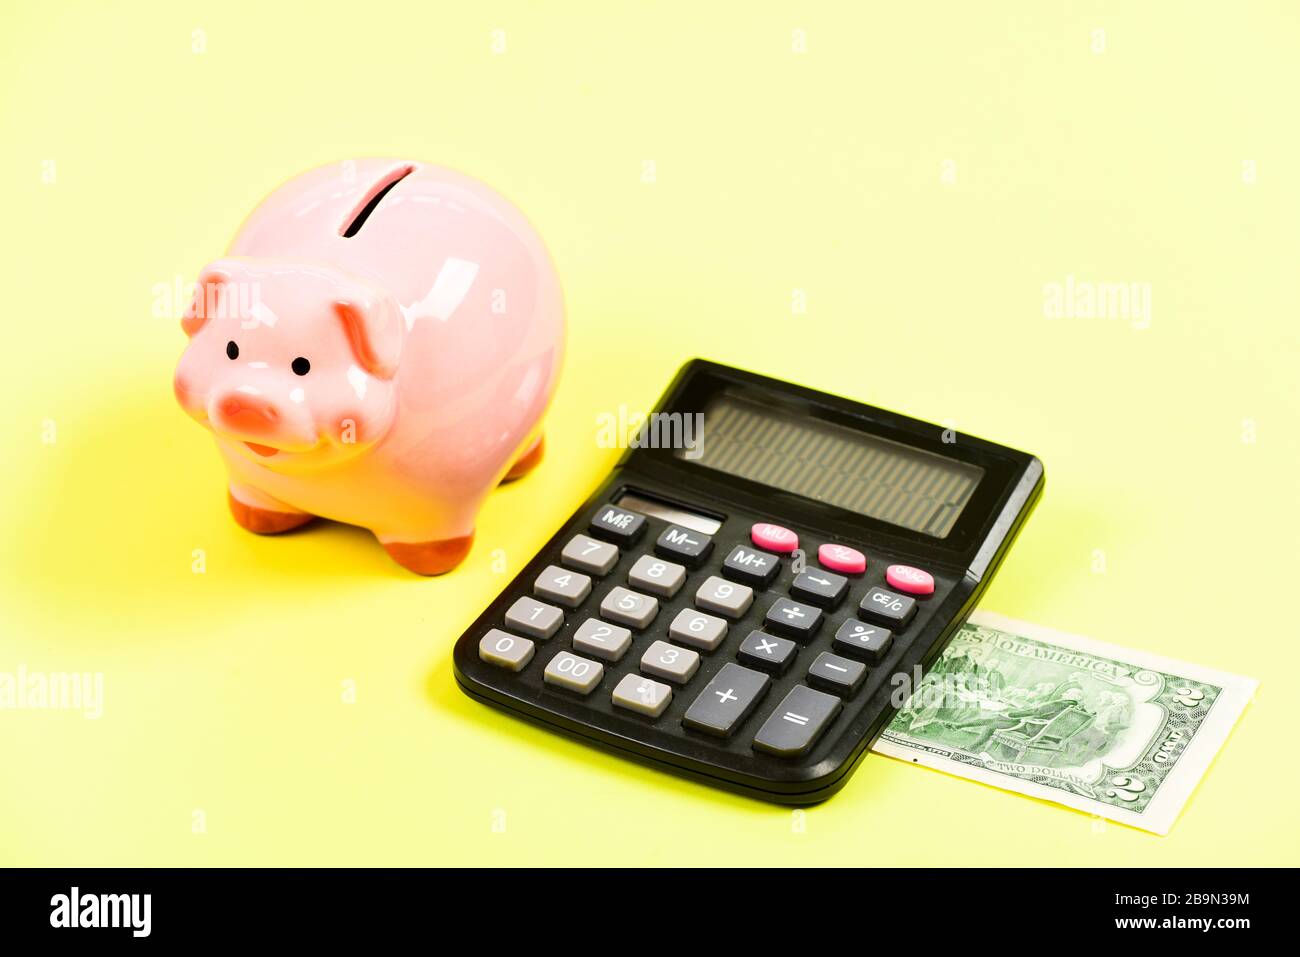 Economics and profit management. Economics and finance. Piggy bank money savings. Piggy bank pink pig and calculator. Exchange rates. Economics and business administration. Credit debt concept. Stock Photo